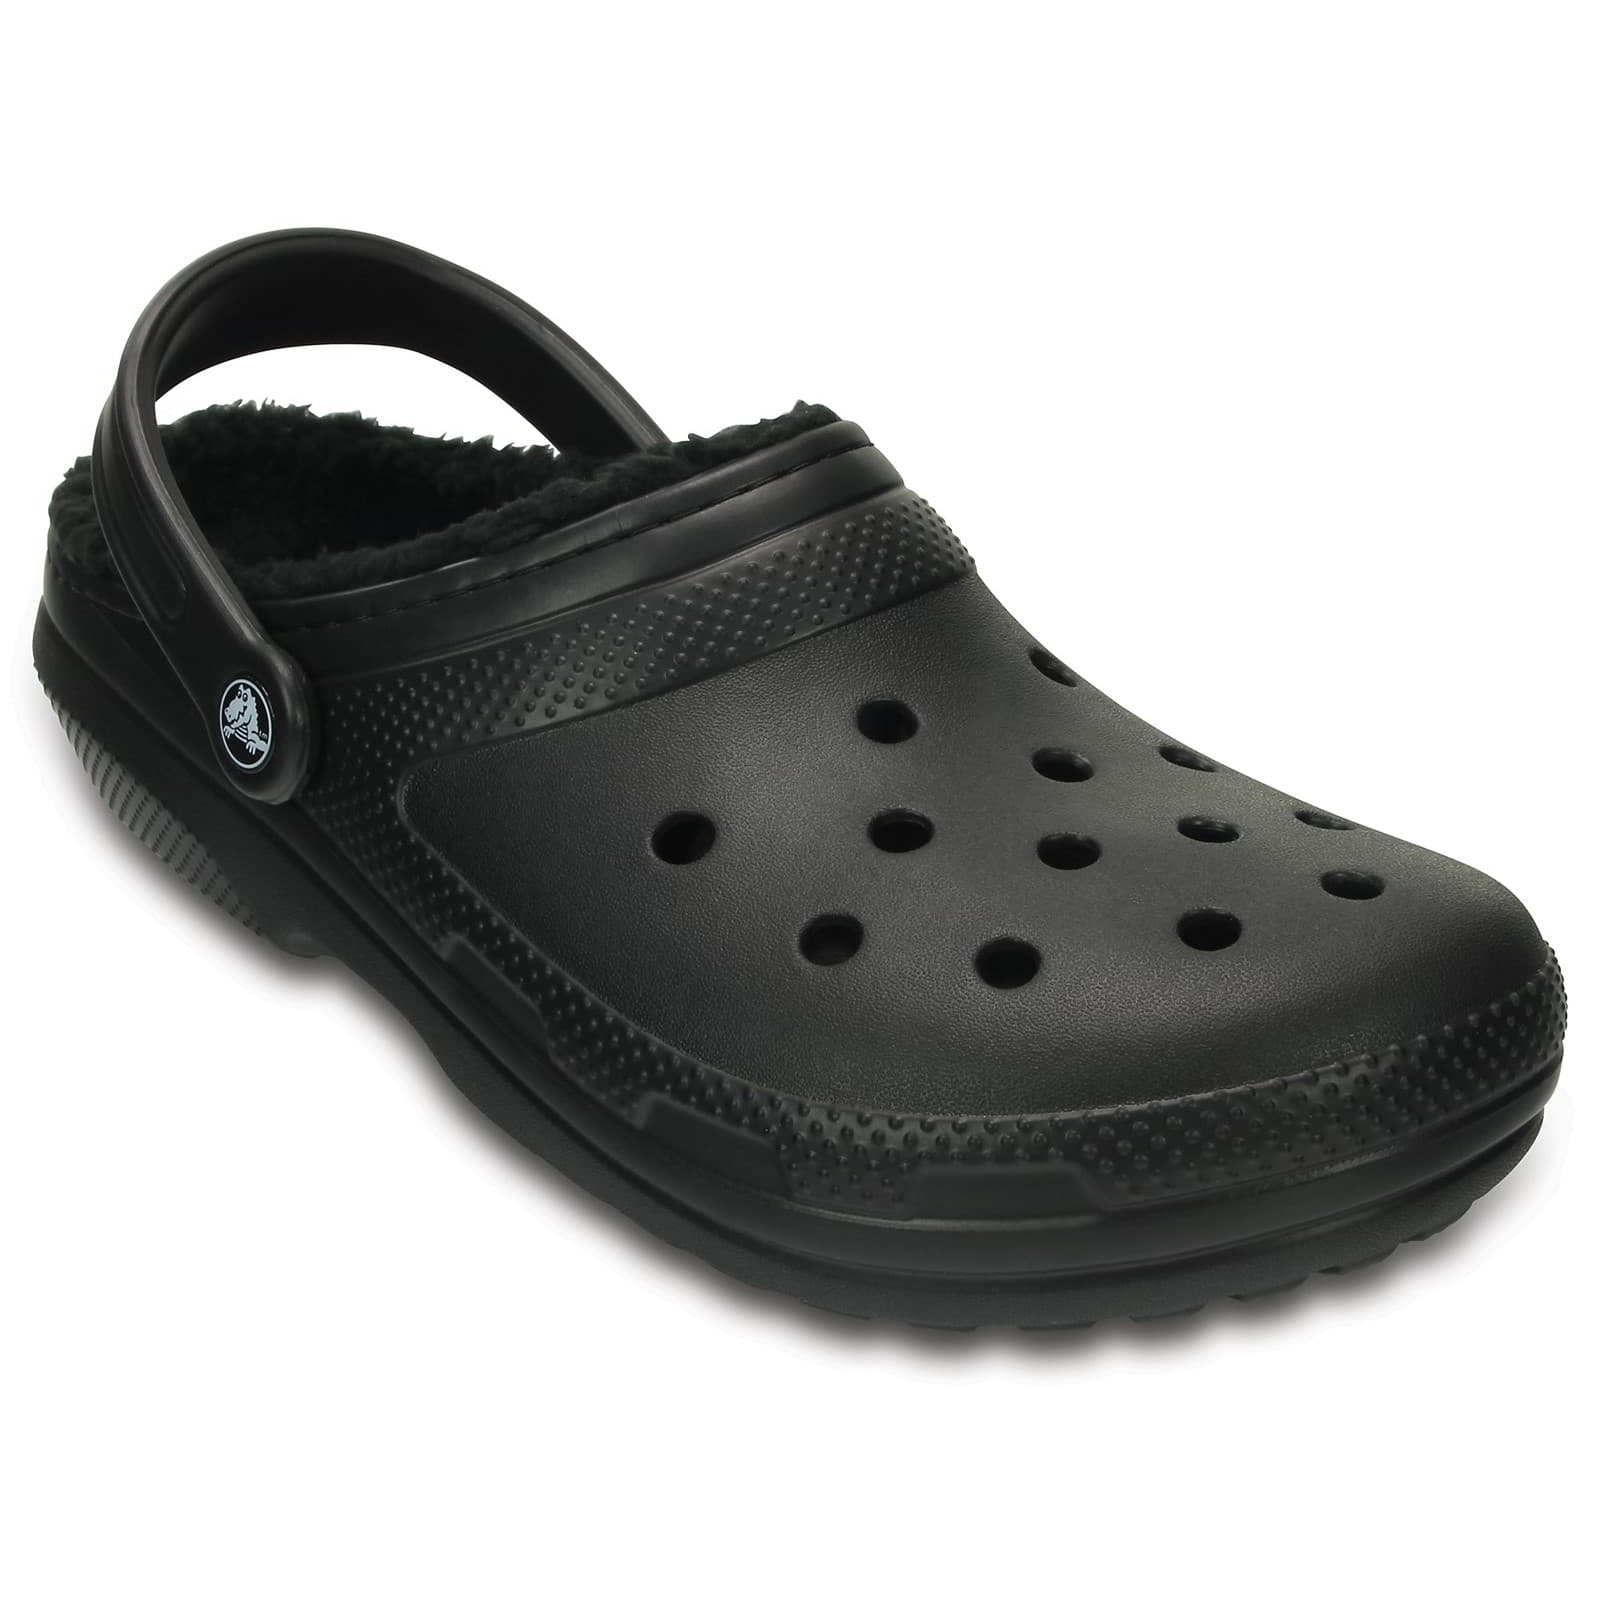 Crocs Men's Women's Classic Lined Clogs Slip On Slippers Shoes - UK 4